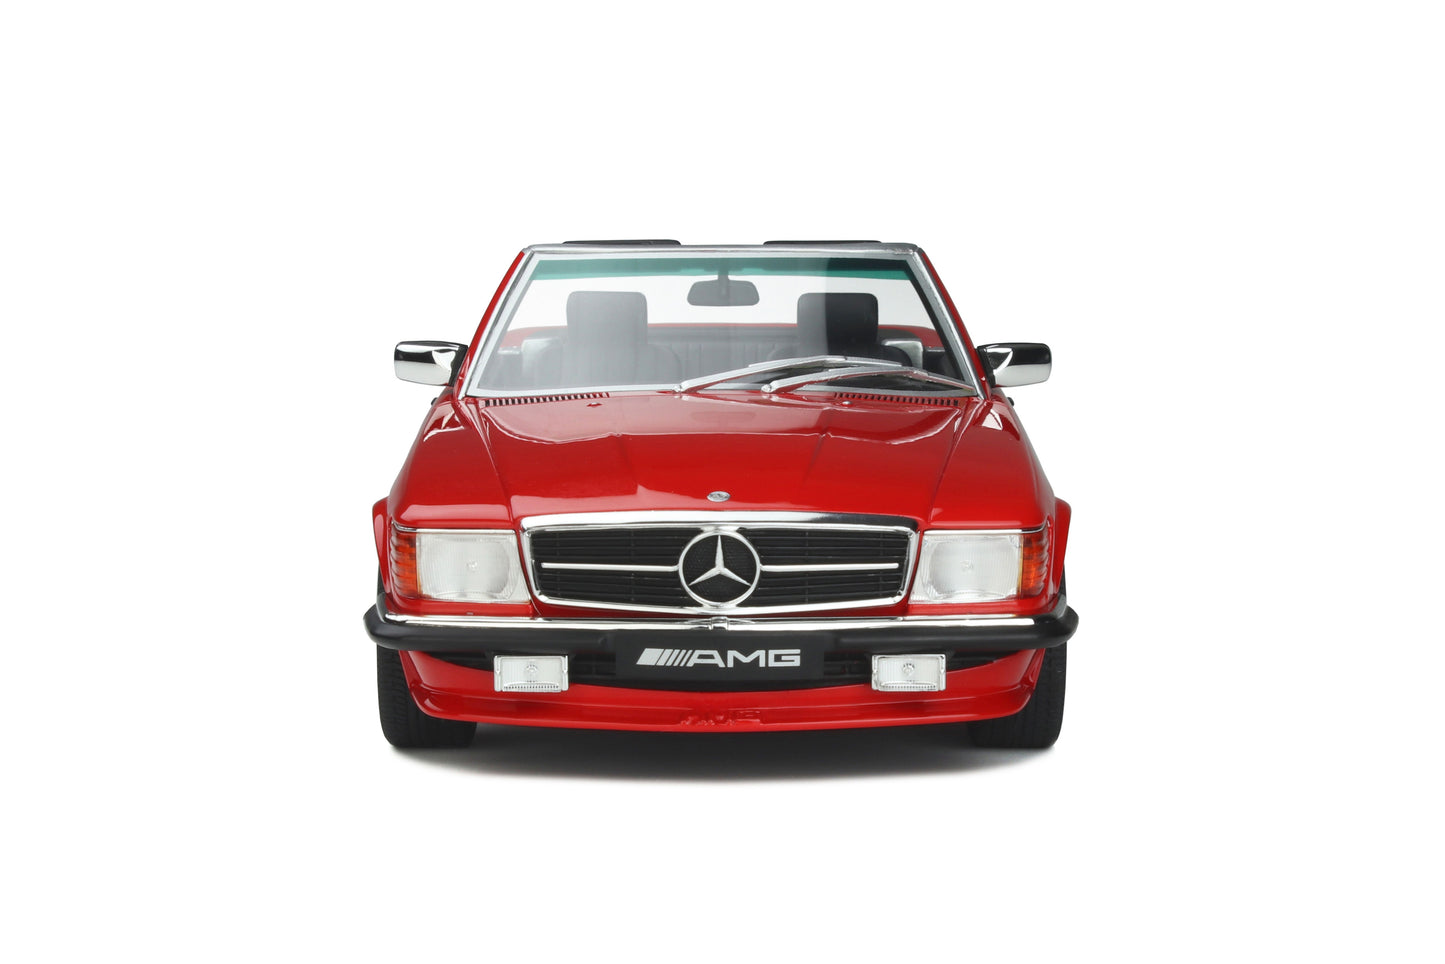 OTTO 1:18 Mercedes-Benz R107 500 SL AMG 1986 OT962